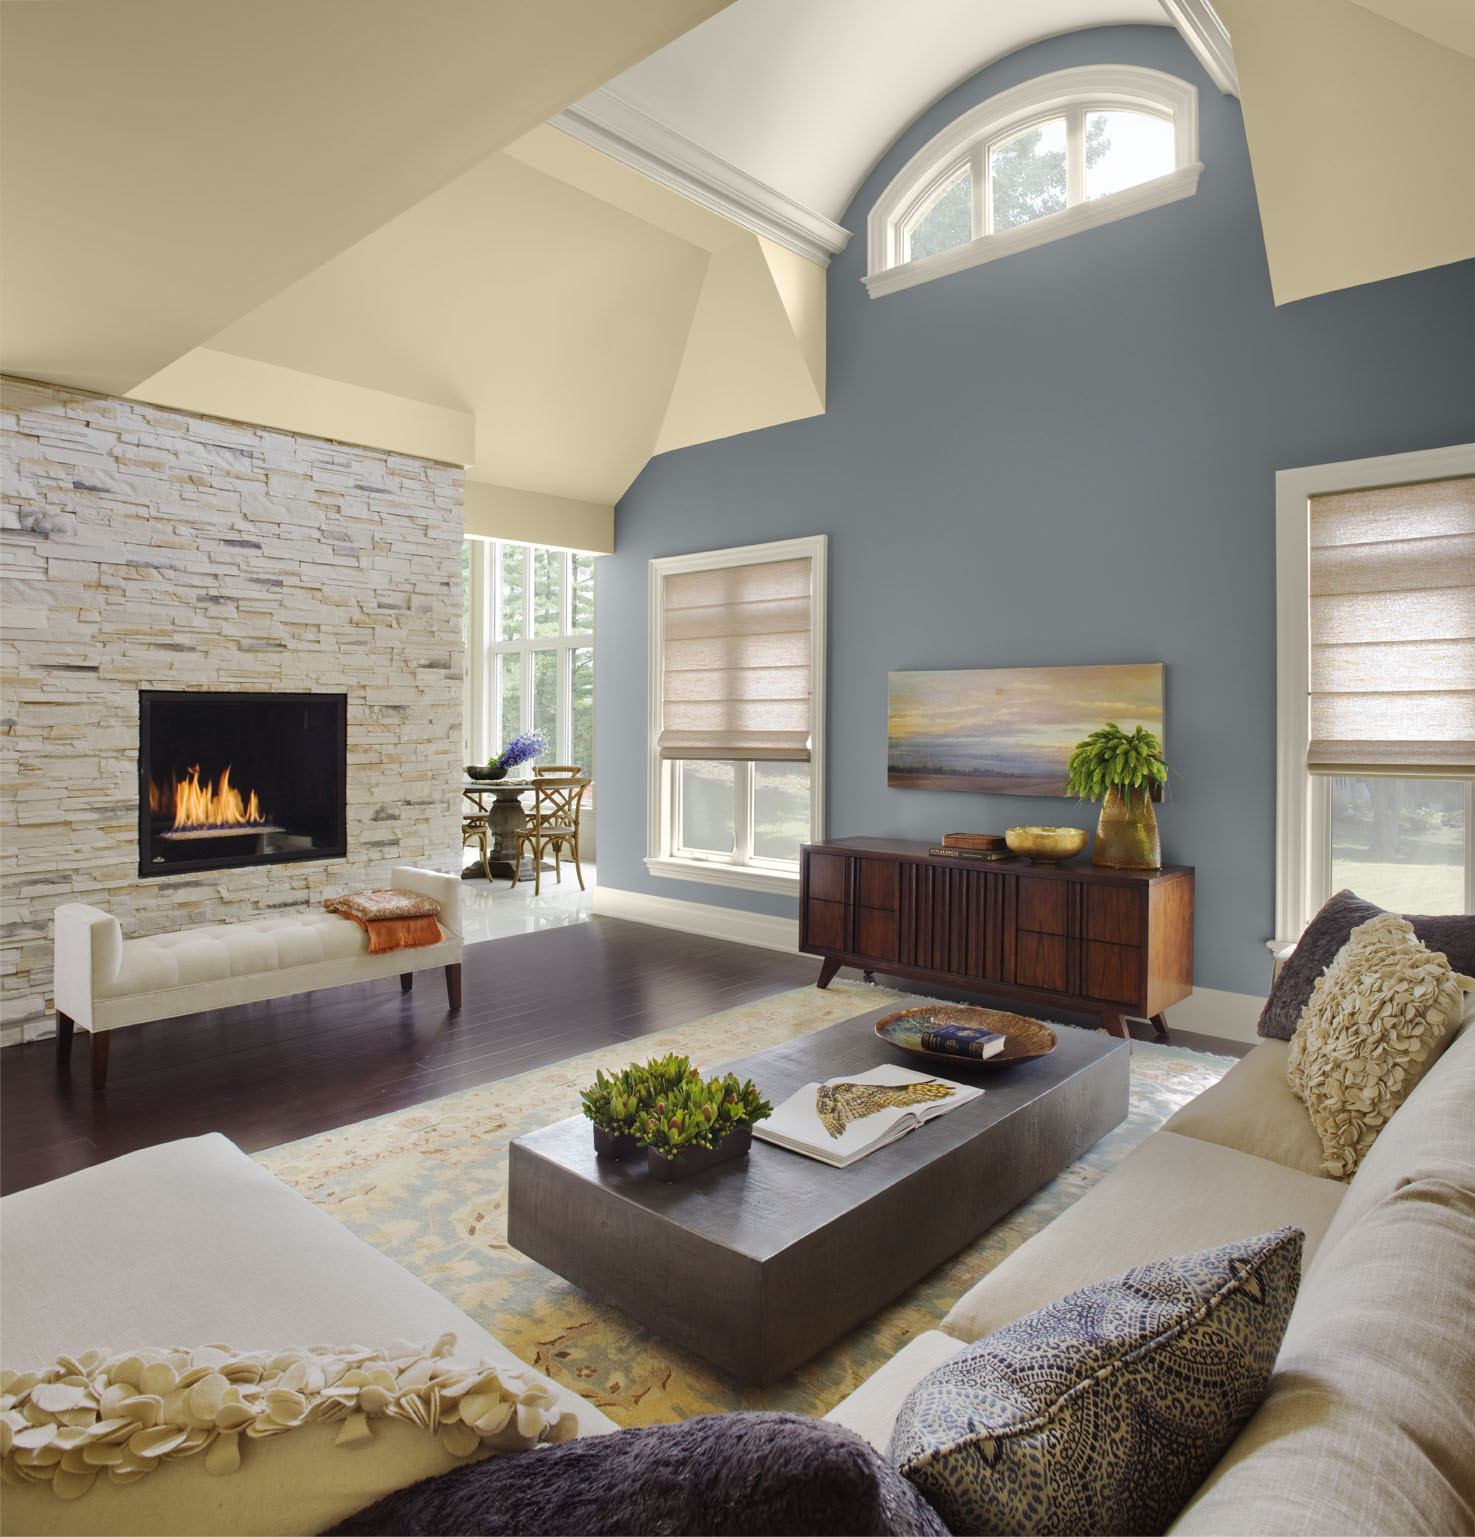 Living Room Wall Color Ideas
 Vaulted Living Room Ideas – HomesFeed